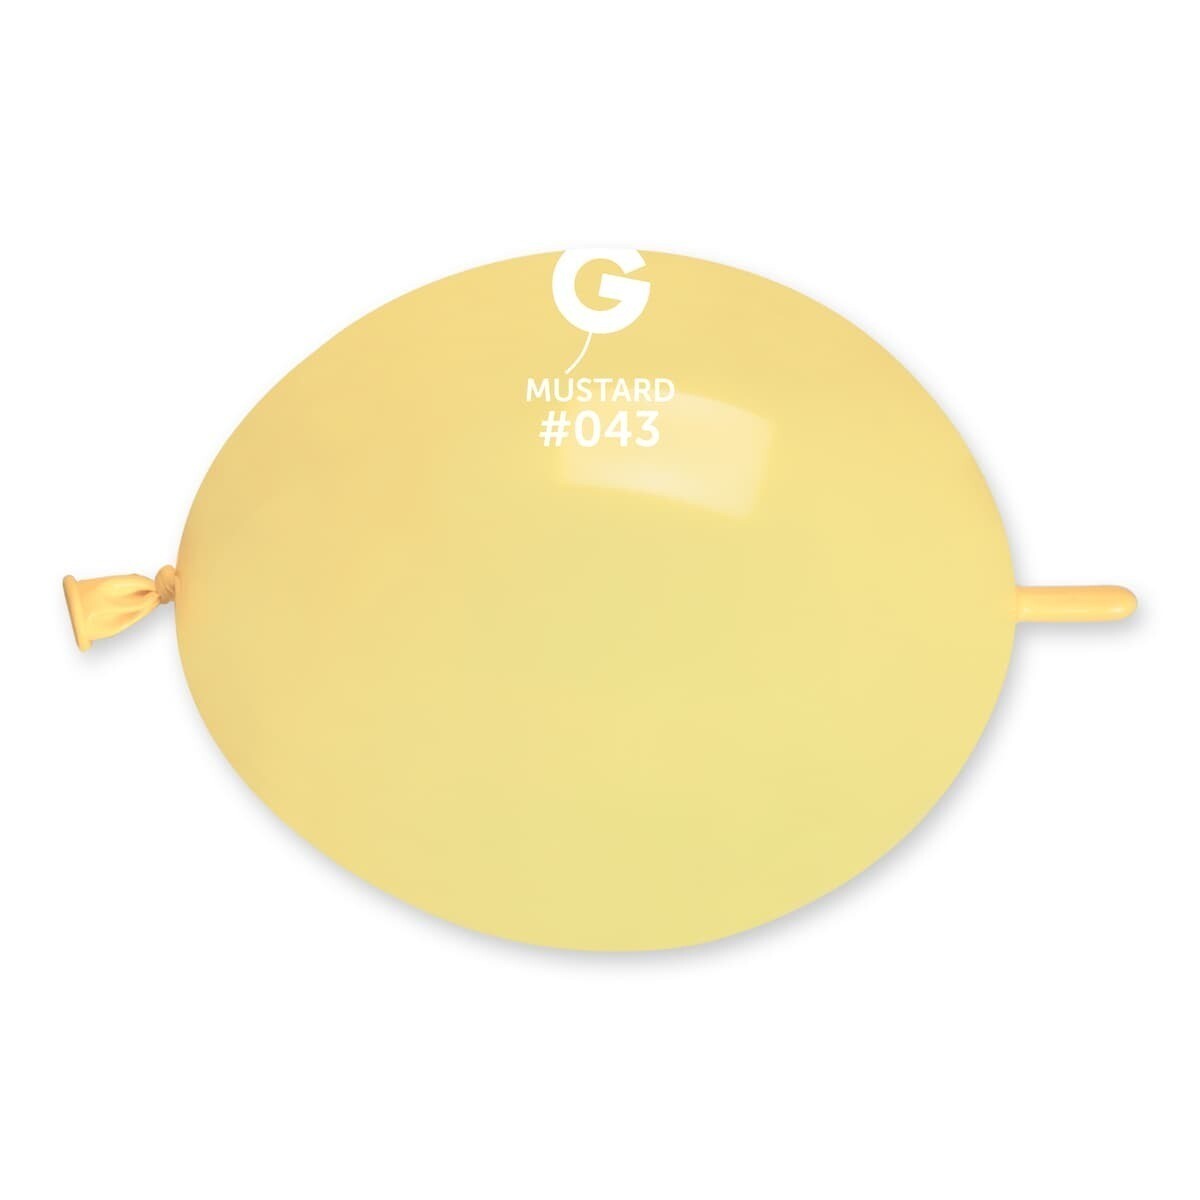 GL6: #043 Mustard 064315 - 6 in